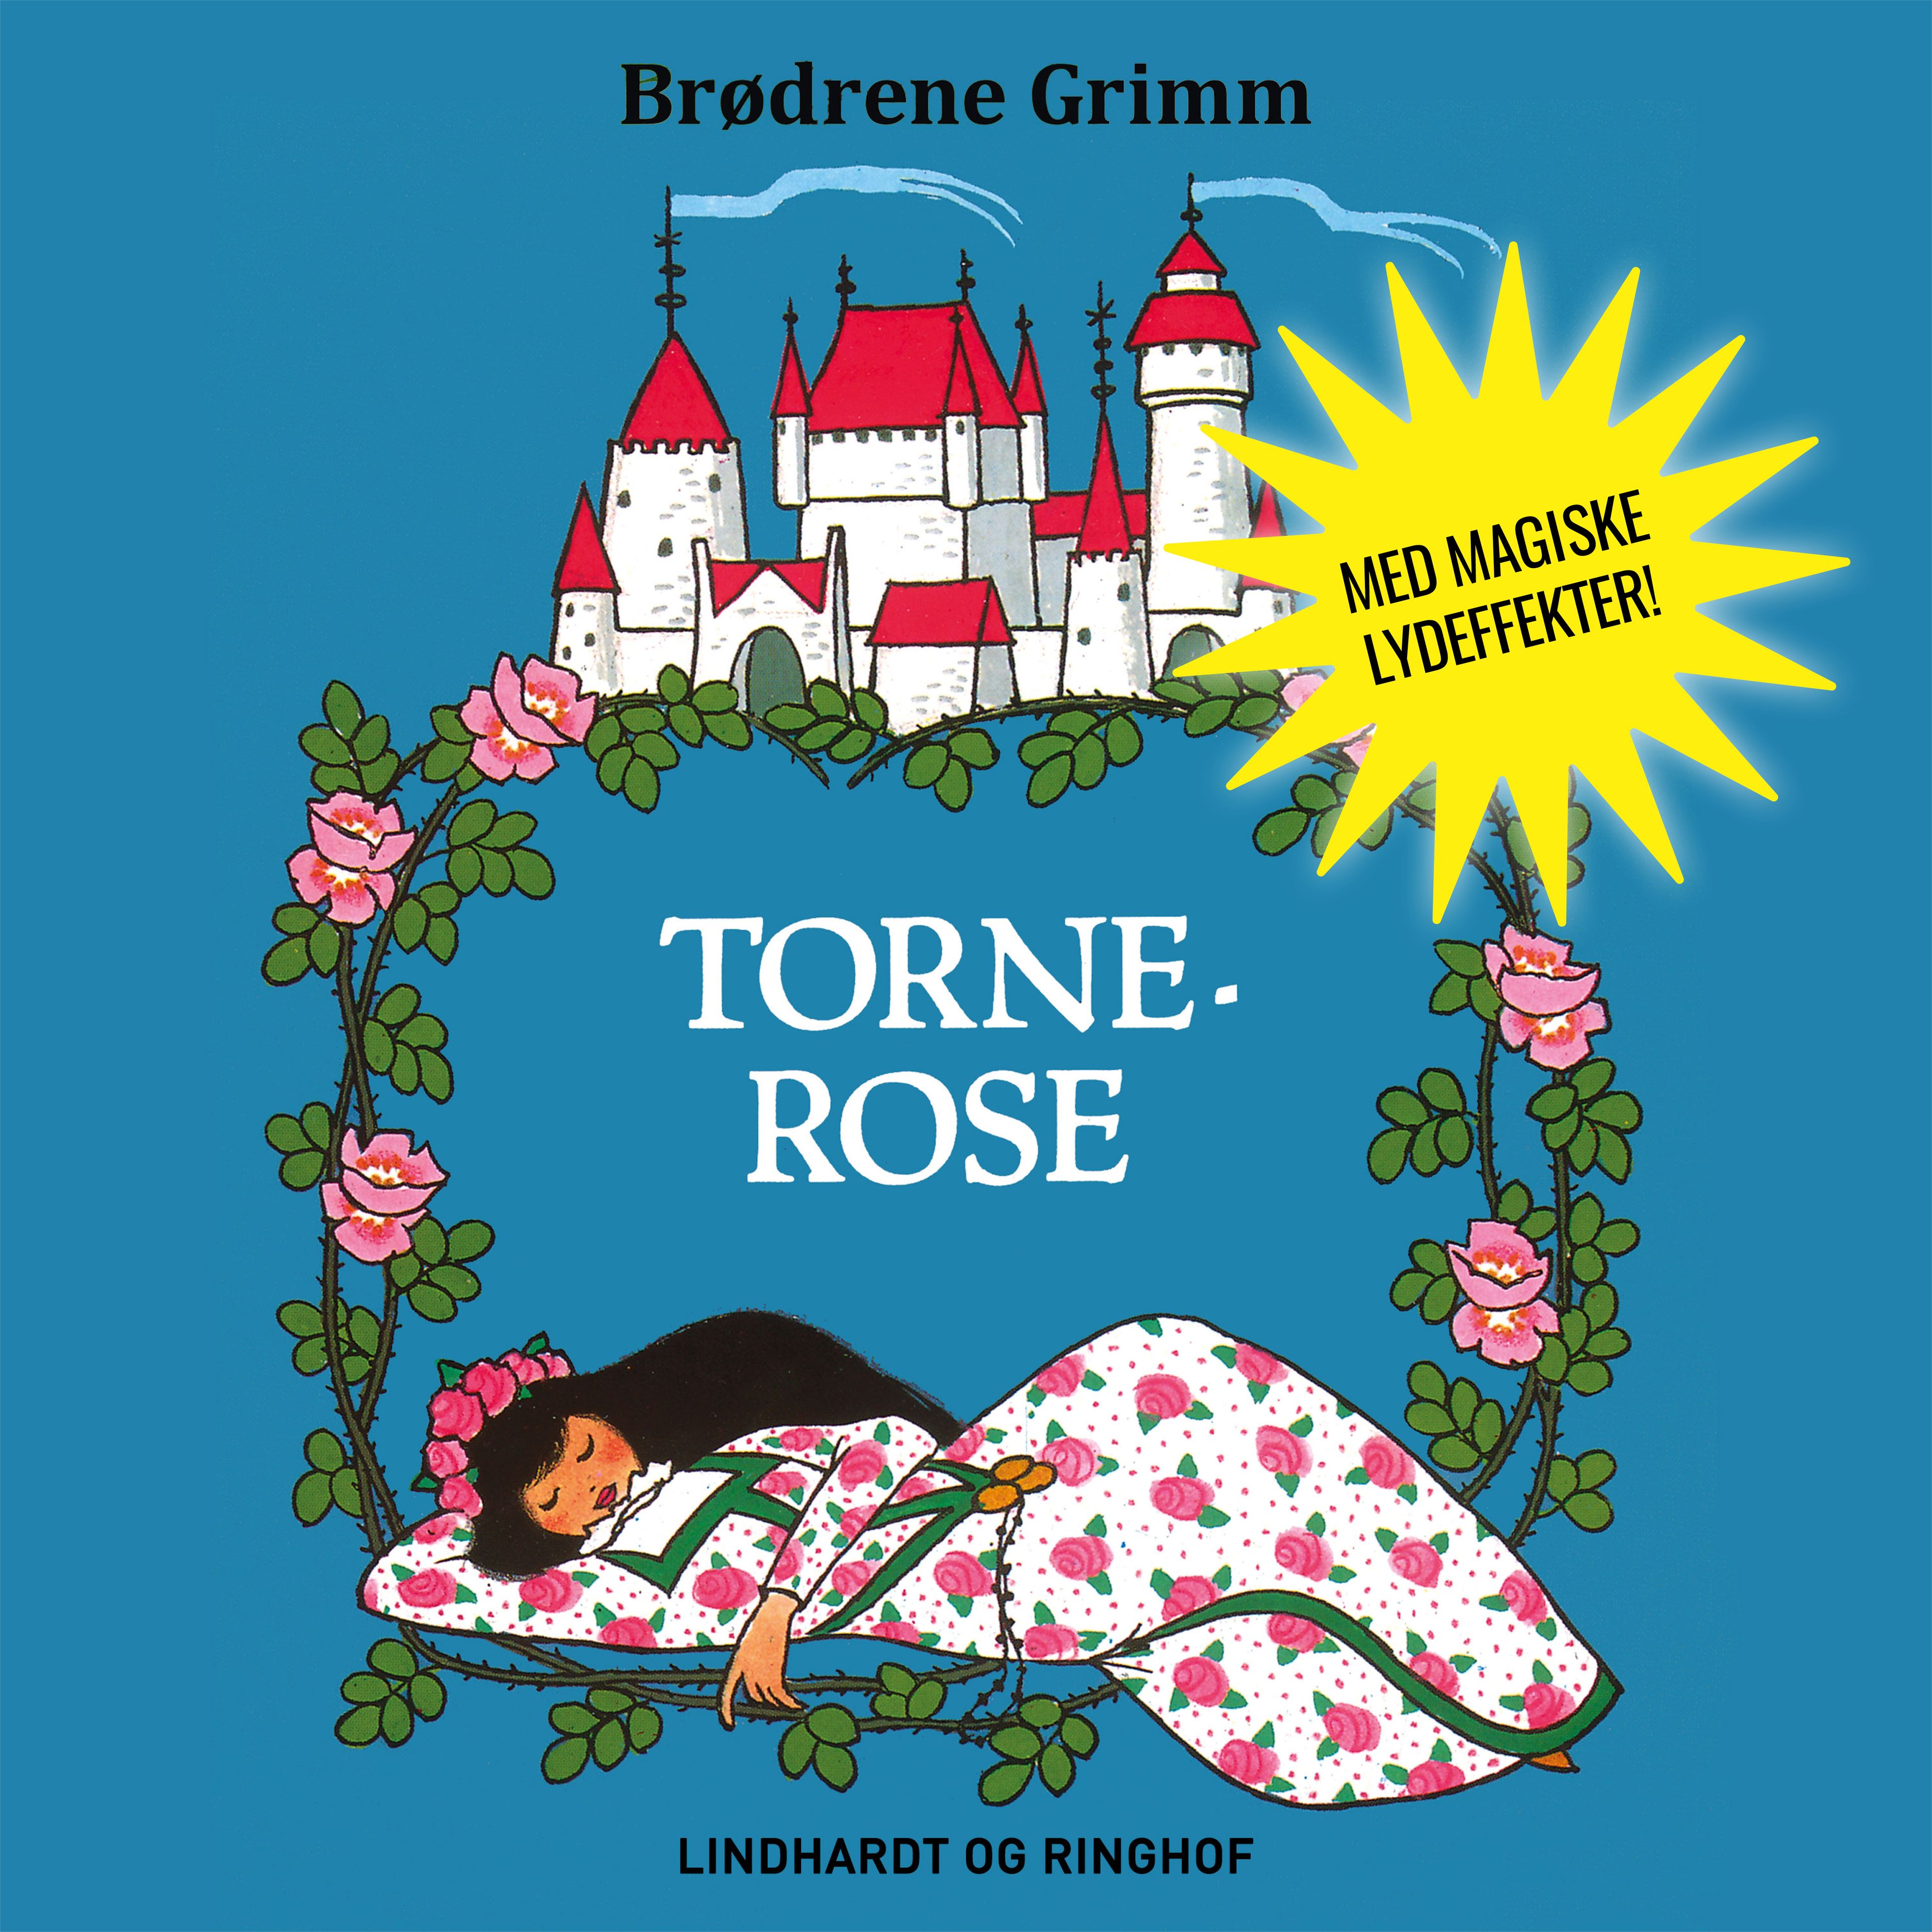 Tornerose - Lydbogsdrama, lydbog af Bdr. Grimm. M.fl